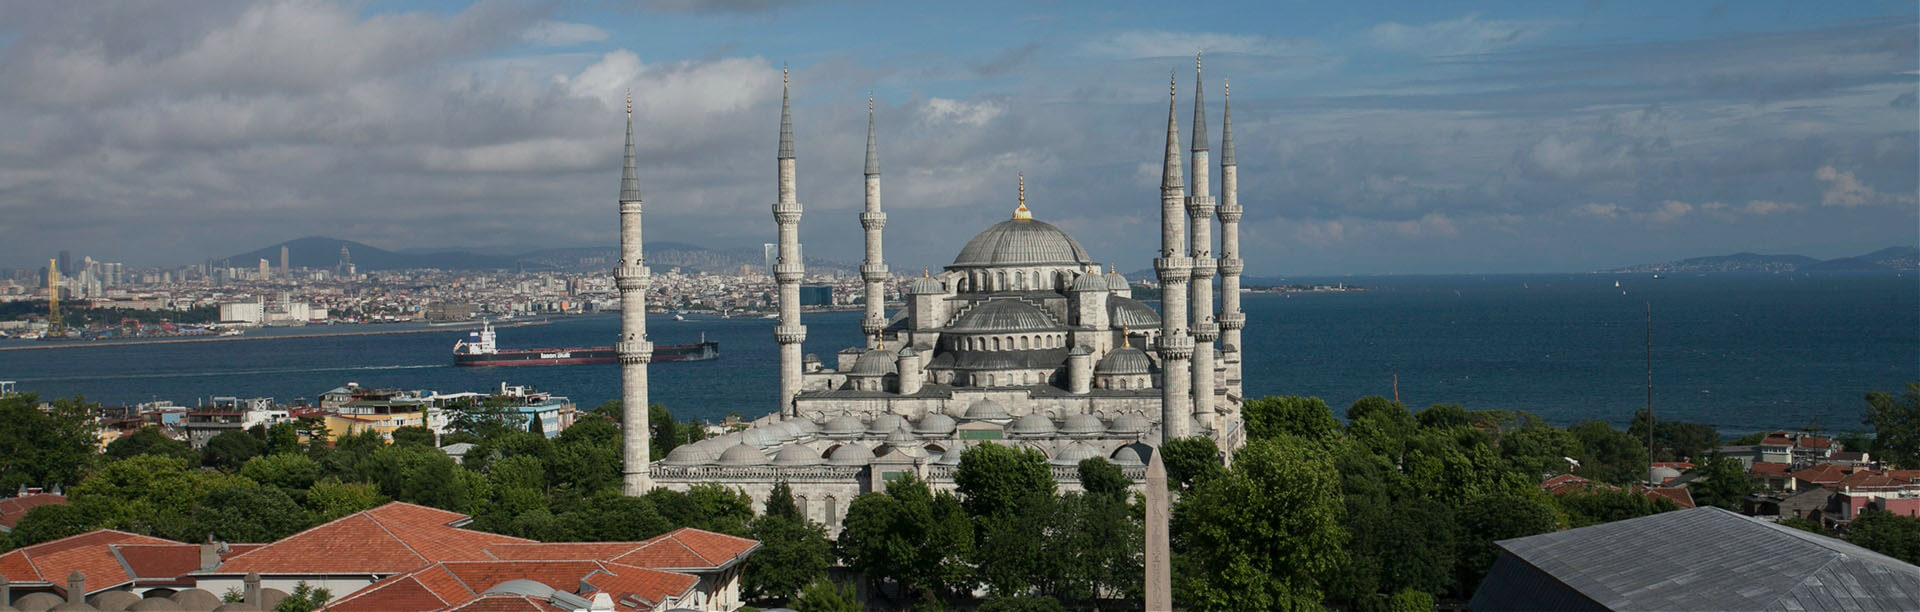 Turkey Visit Visa from Dubai